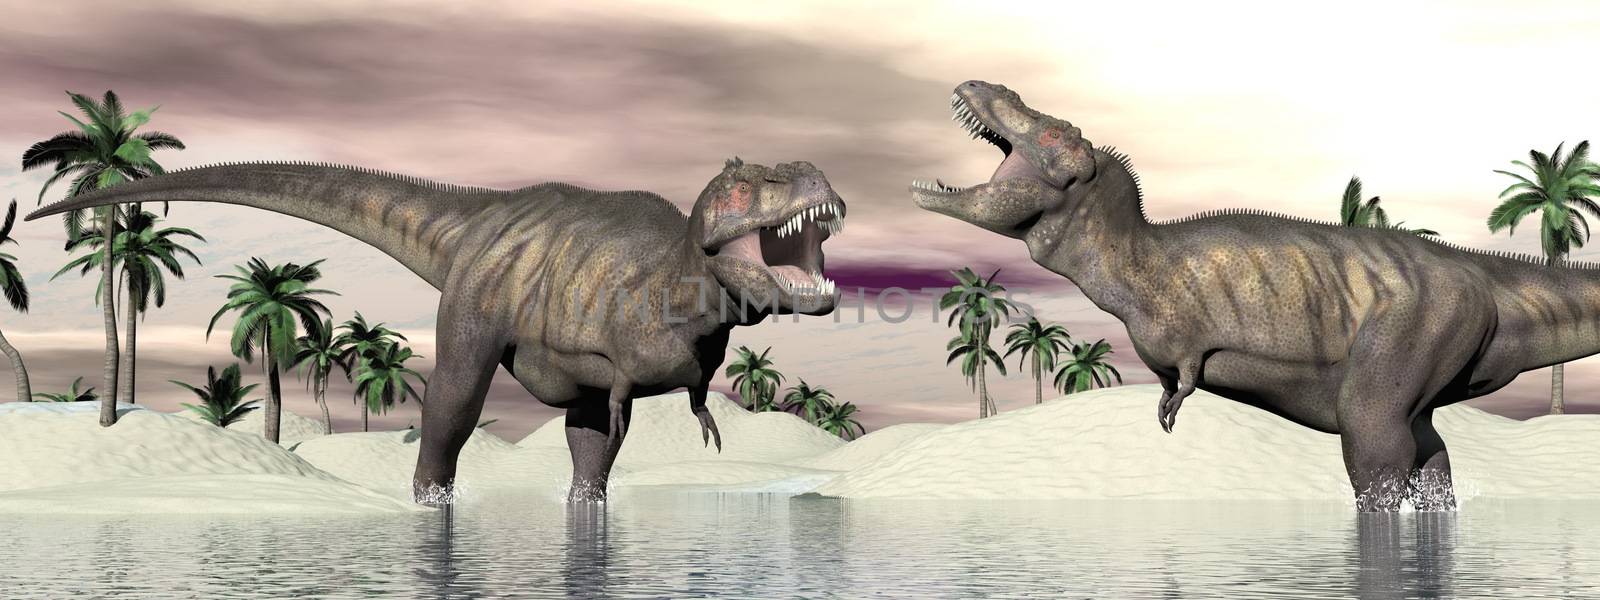 Tyrannosaurus rex dinosaur fight - 3D render by Elenaphotos21